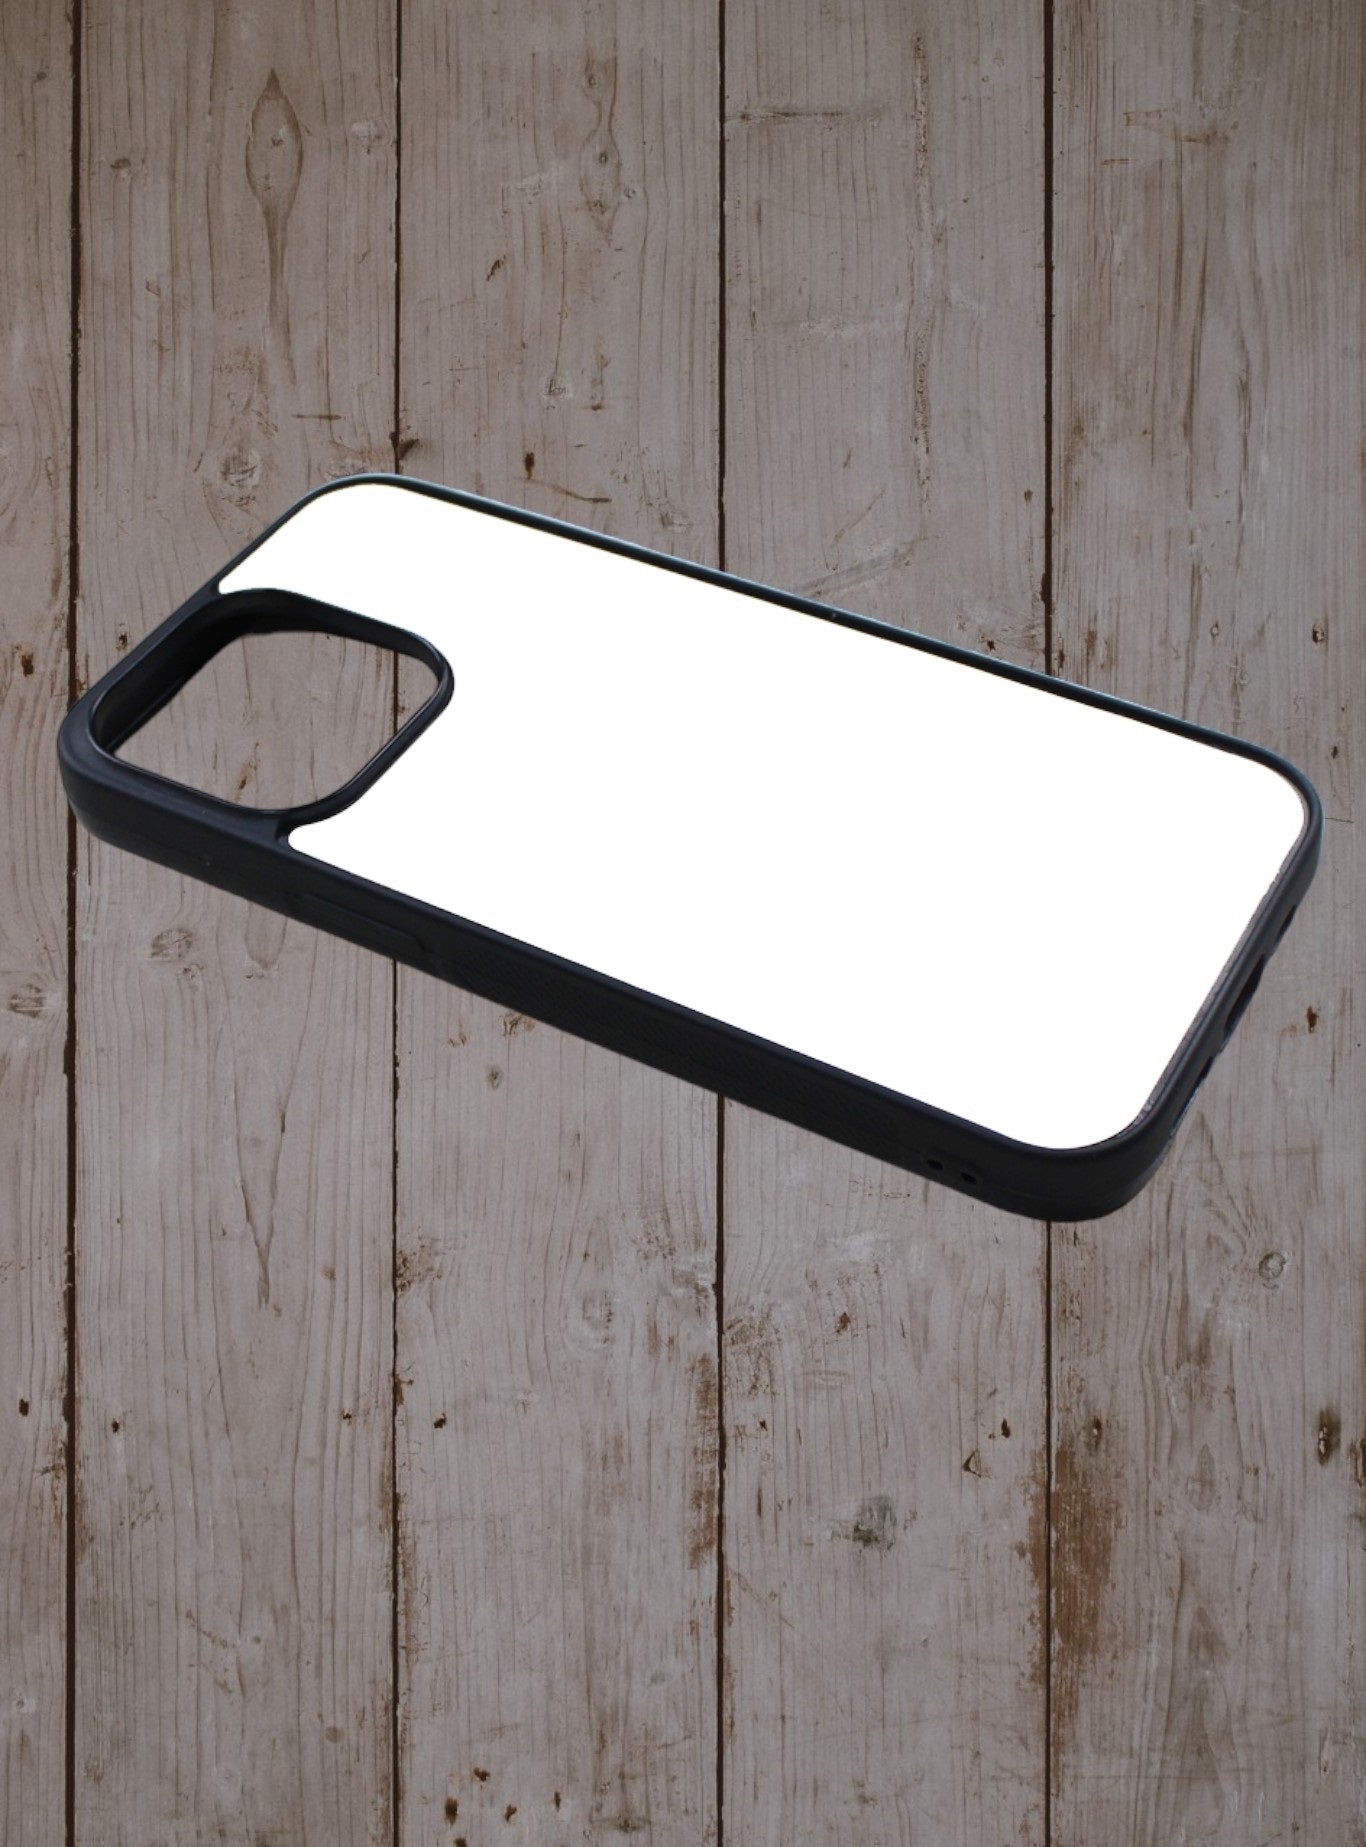 Iphone case - Dream catcher